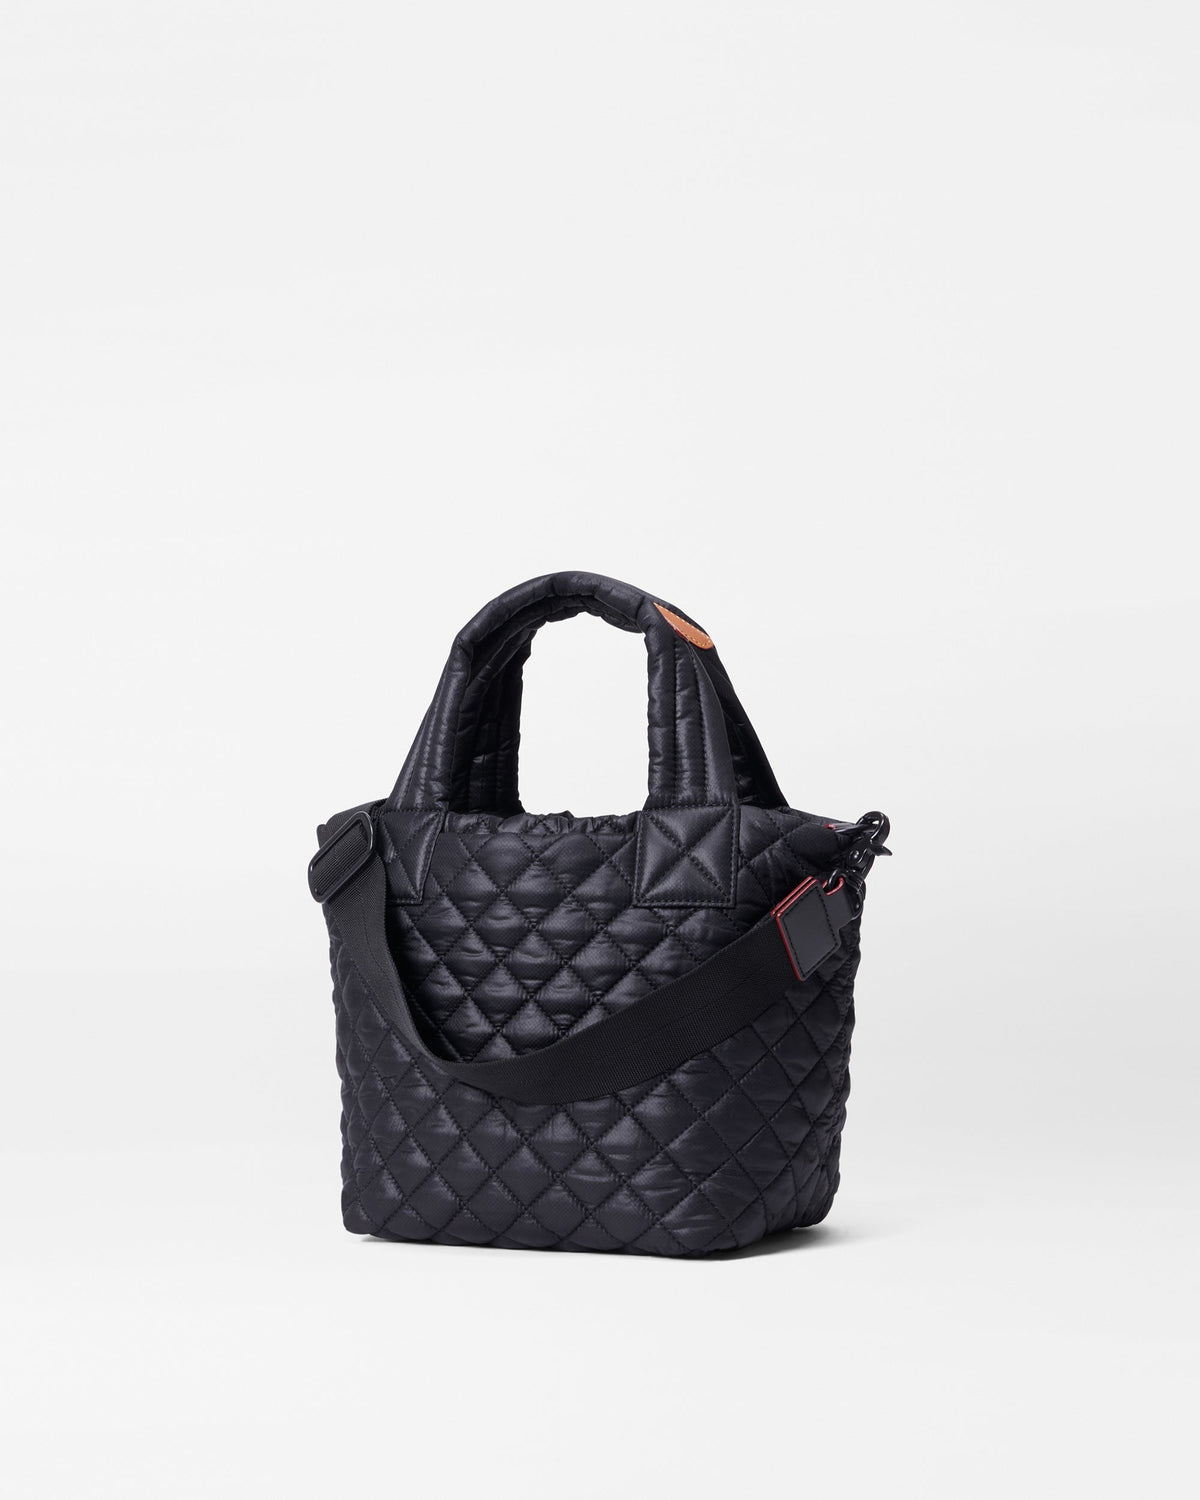 Mini Metro Tote Deluxe Quilted Handbag in Black